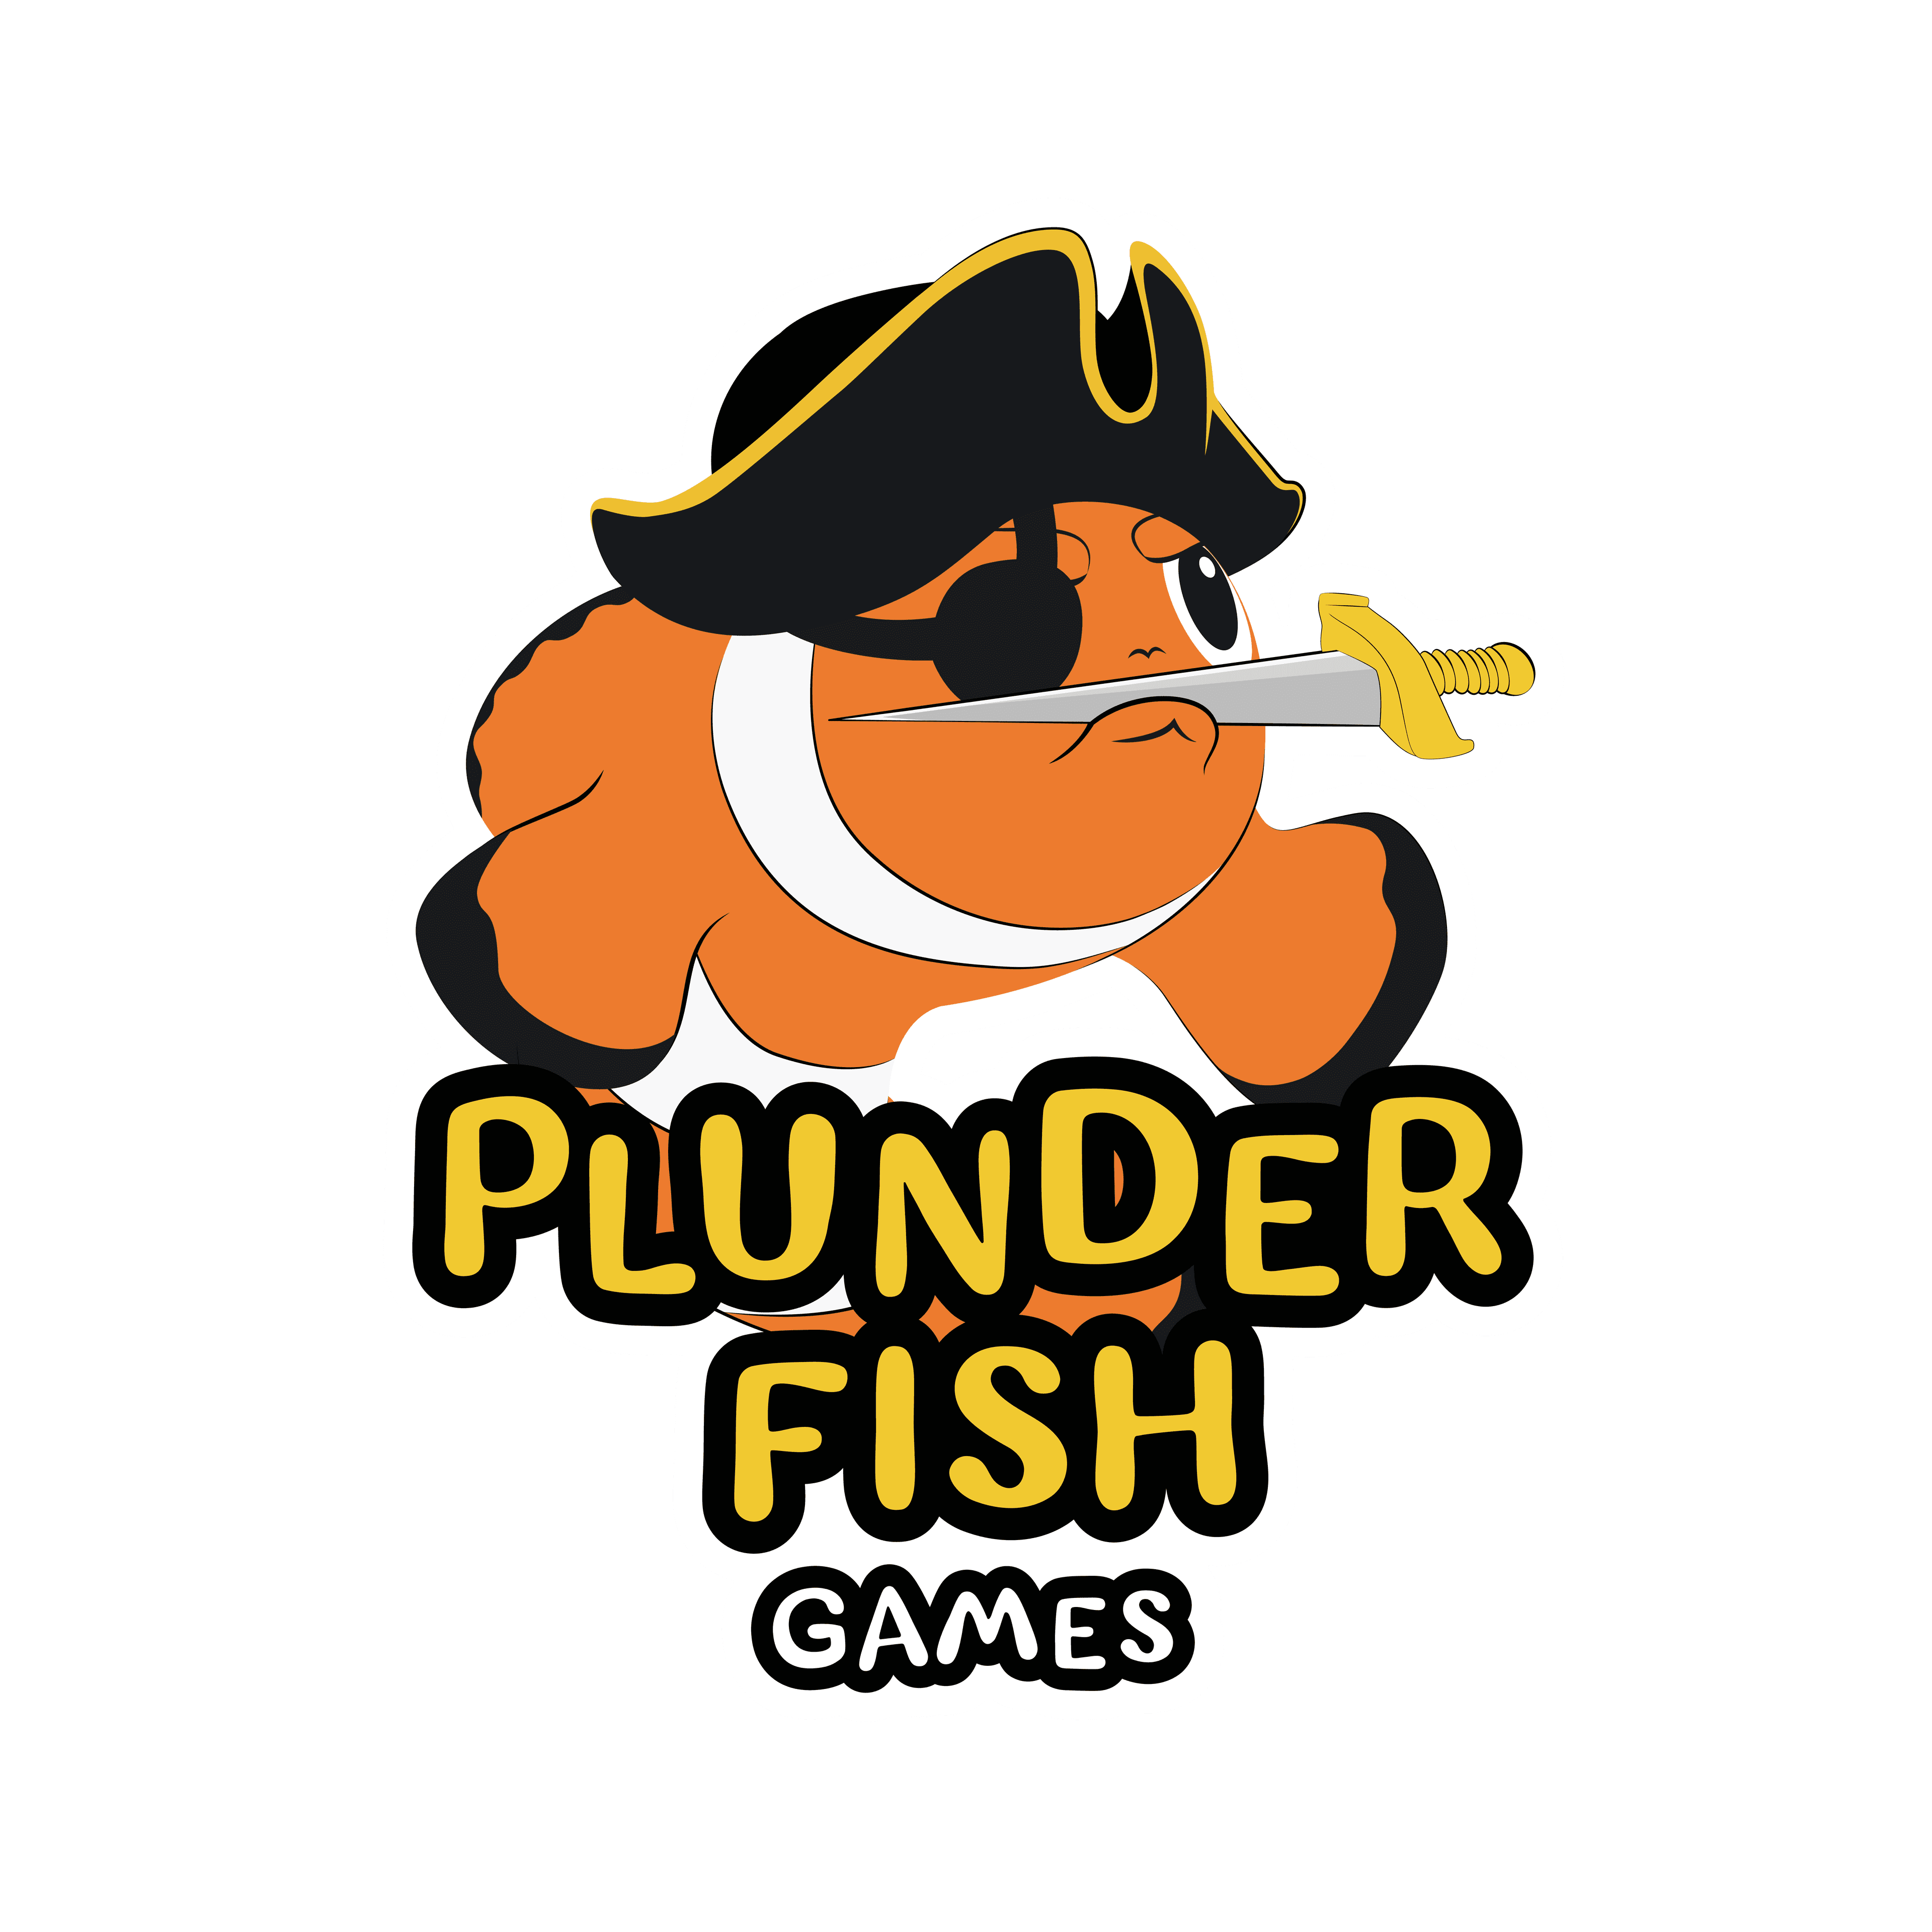 Plunder Fish Games logo 